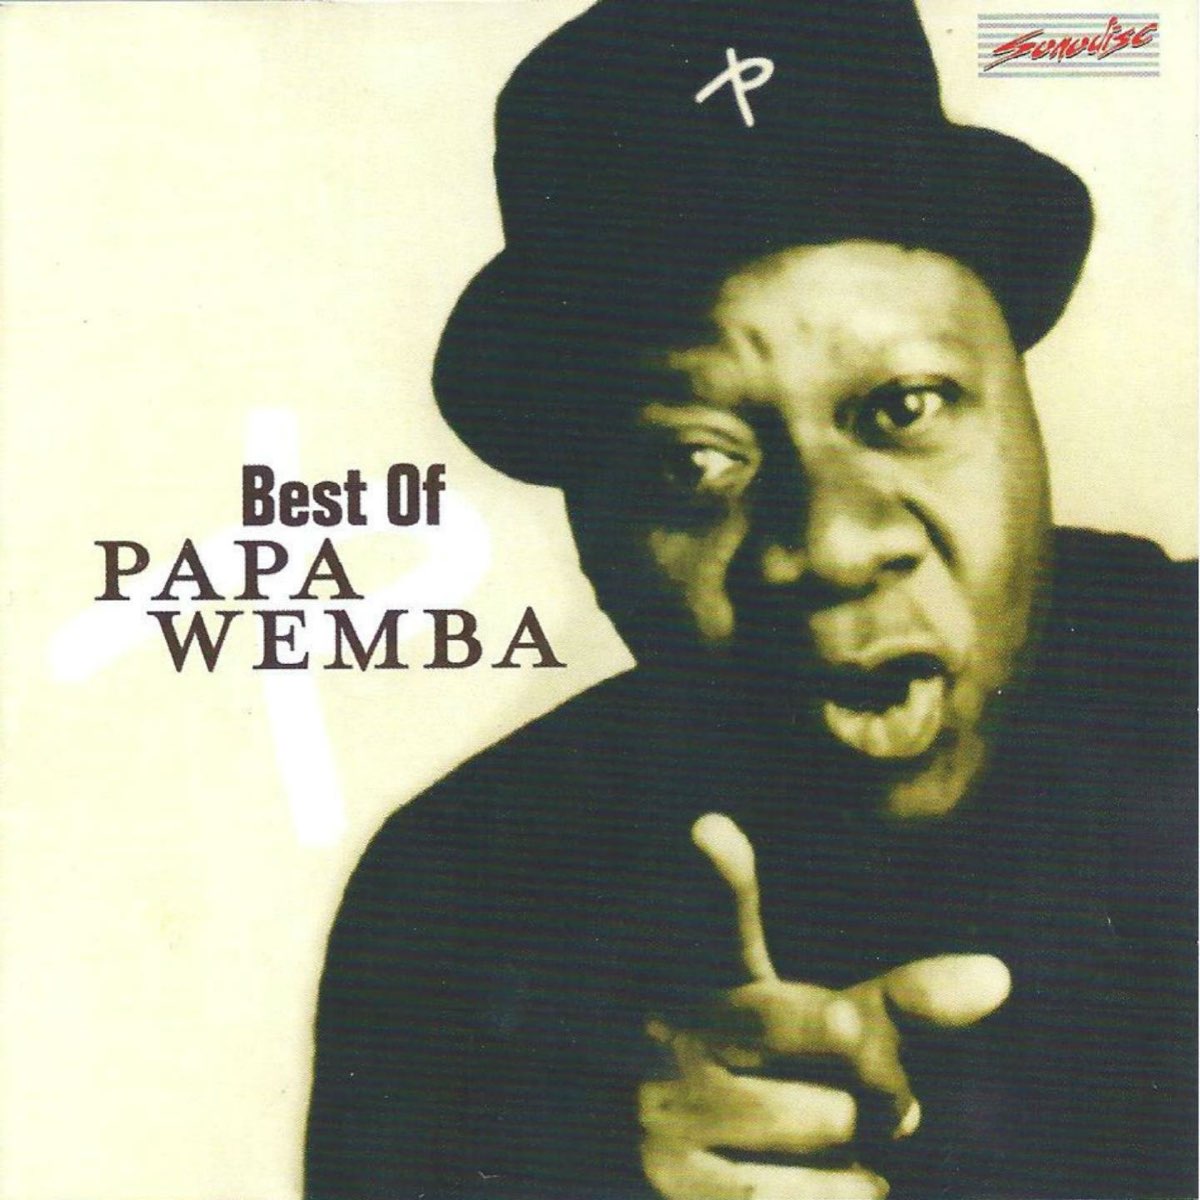 u200eBest of Papa Wemba - パパ・ウェンバのアルバム - Apple Music